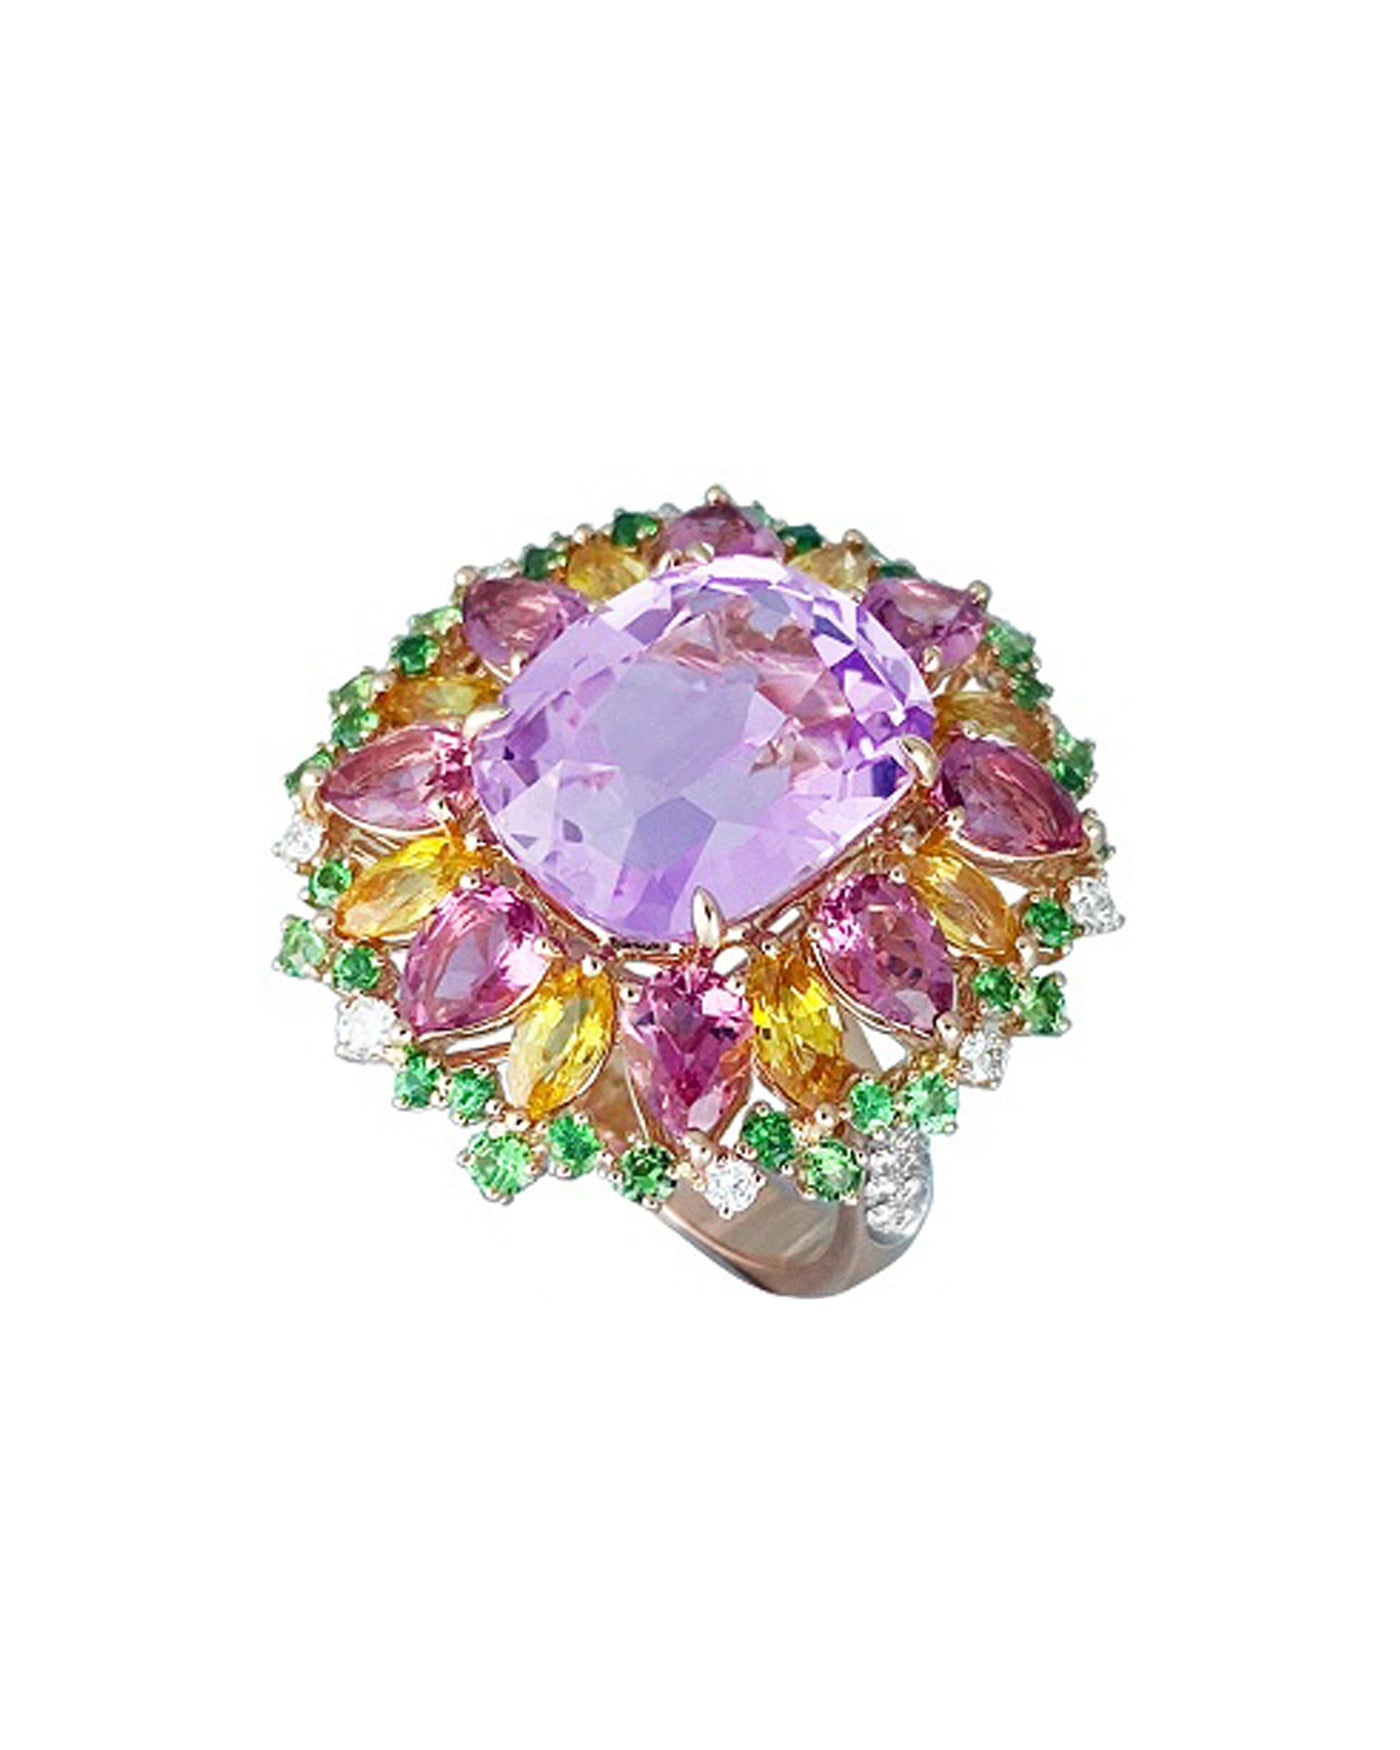 Kunzite Cocktail ring enhanced with diamonds, tsavorite, pink tourmaline and yellow sapphires, crafted in 18 karat rose gold